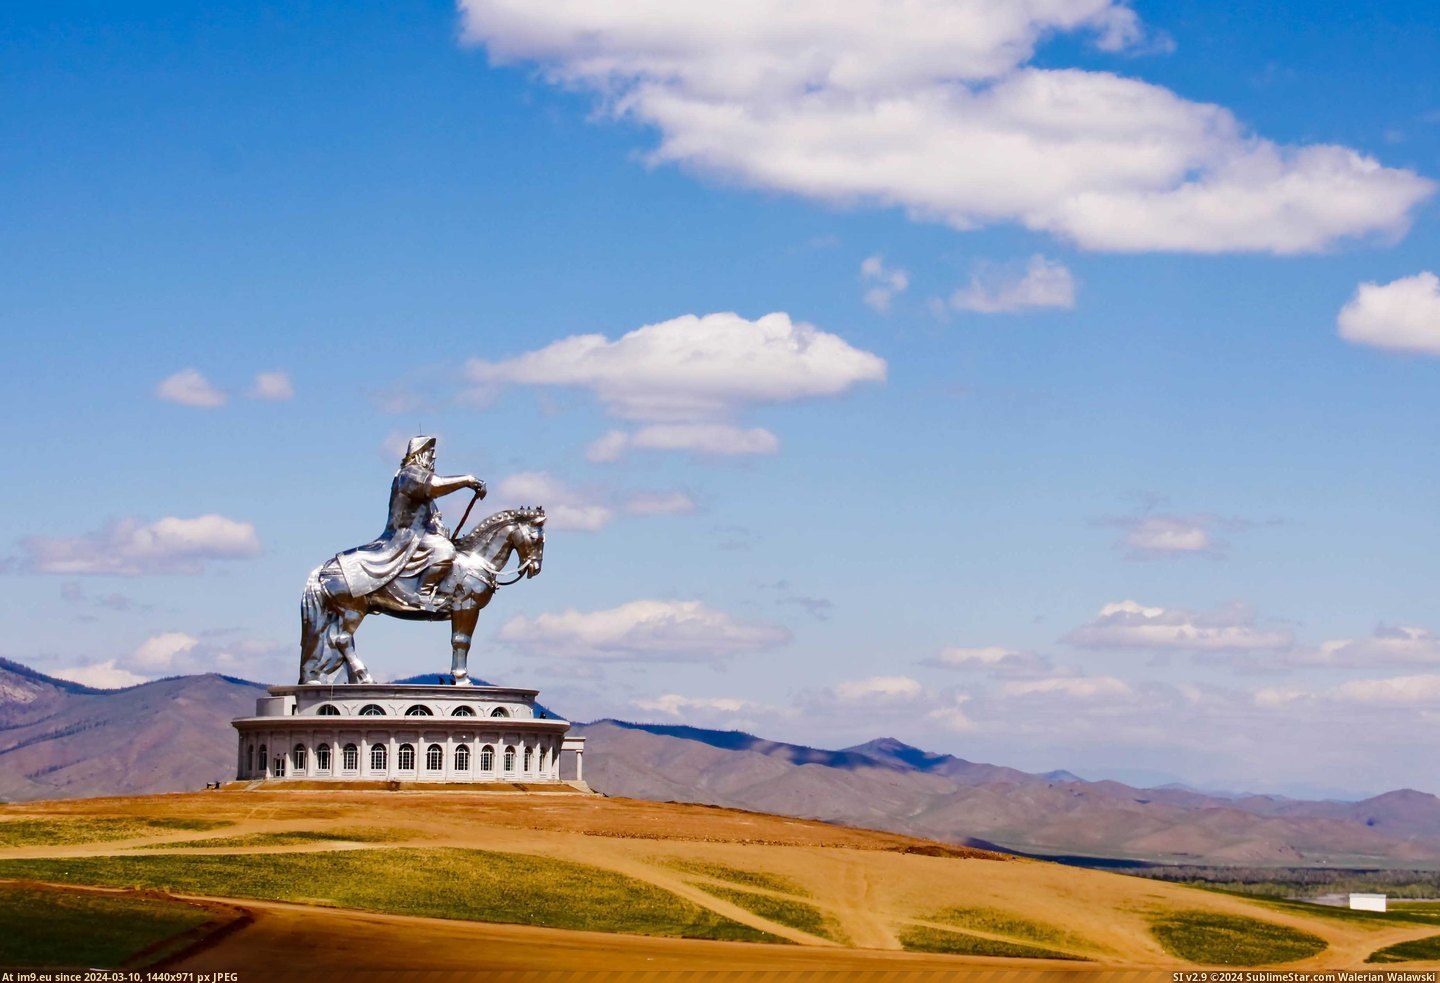 #Statue #Khan #Mongolia [Pics] Statue of Genghis Khan in Mongolia Pic. (Изображение из альбом My r/PICS favs))